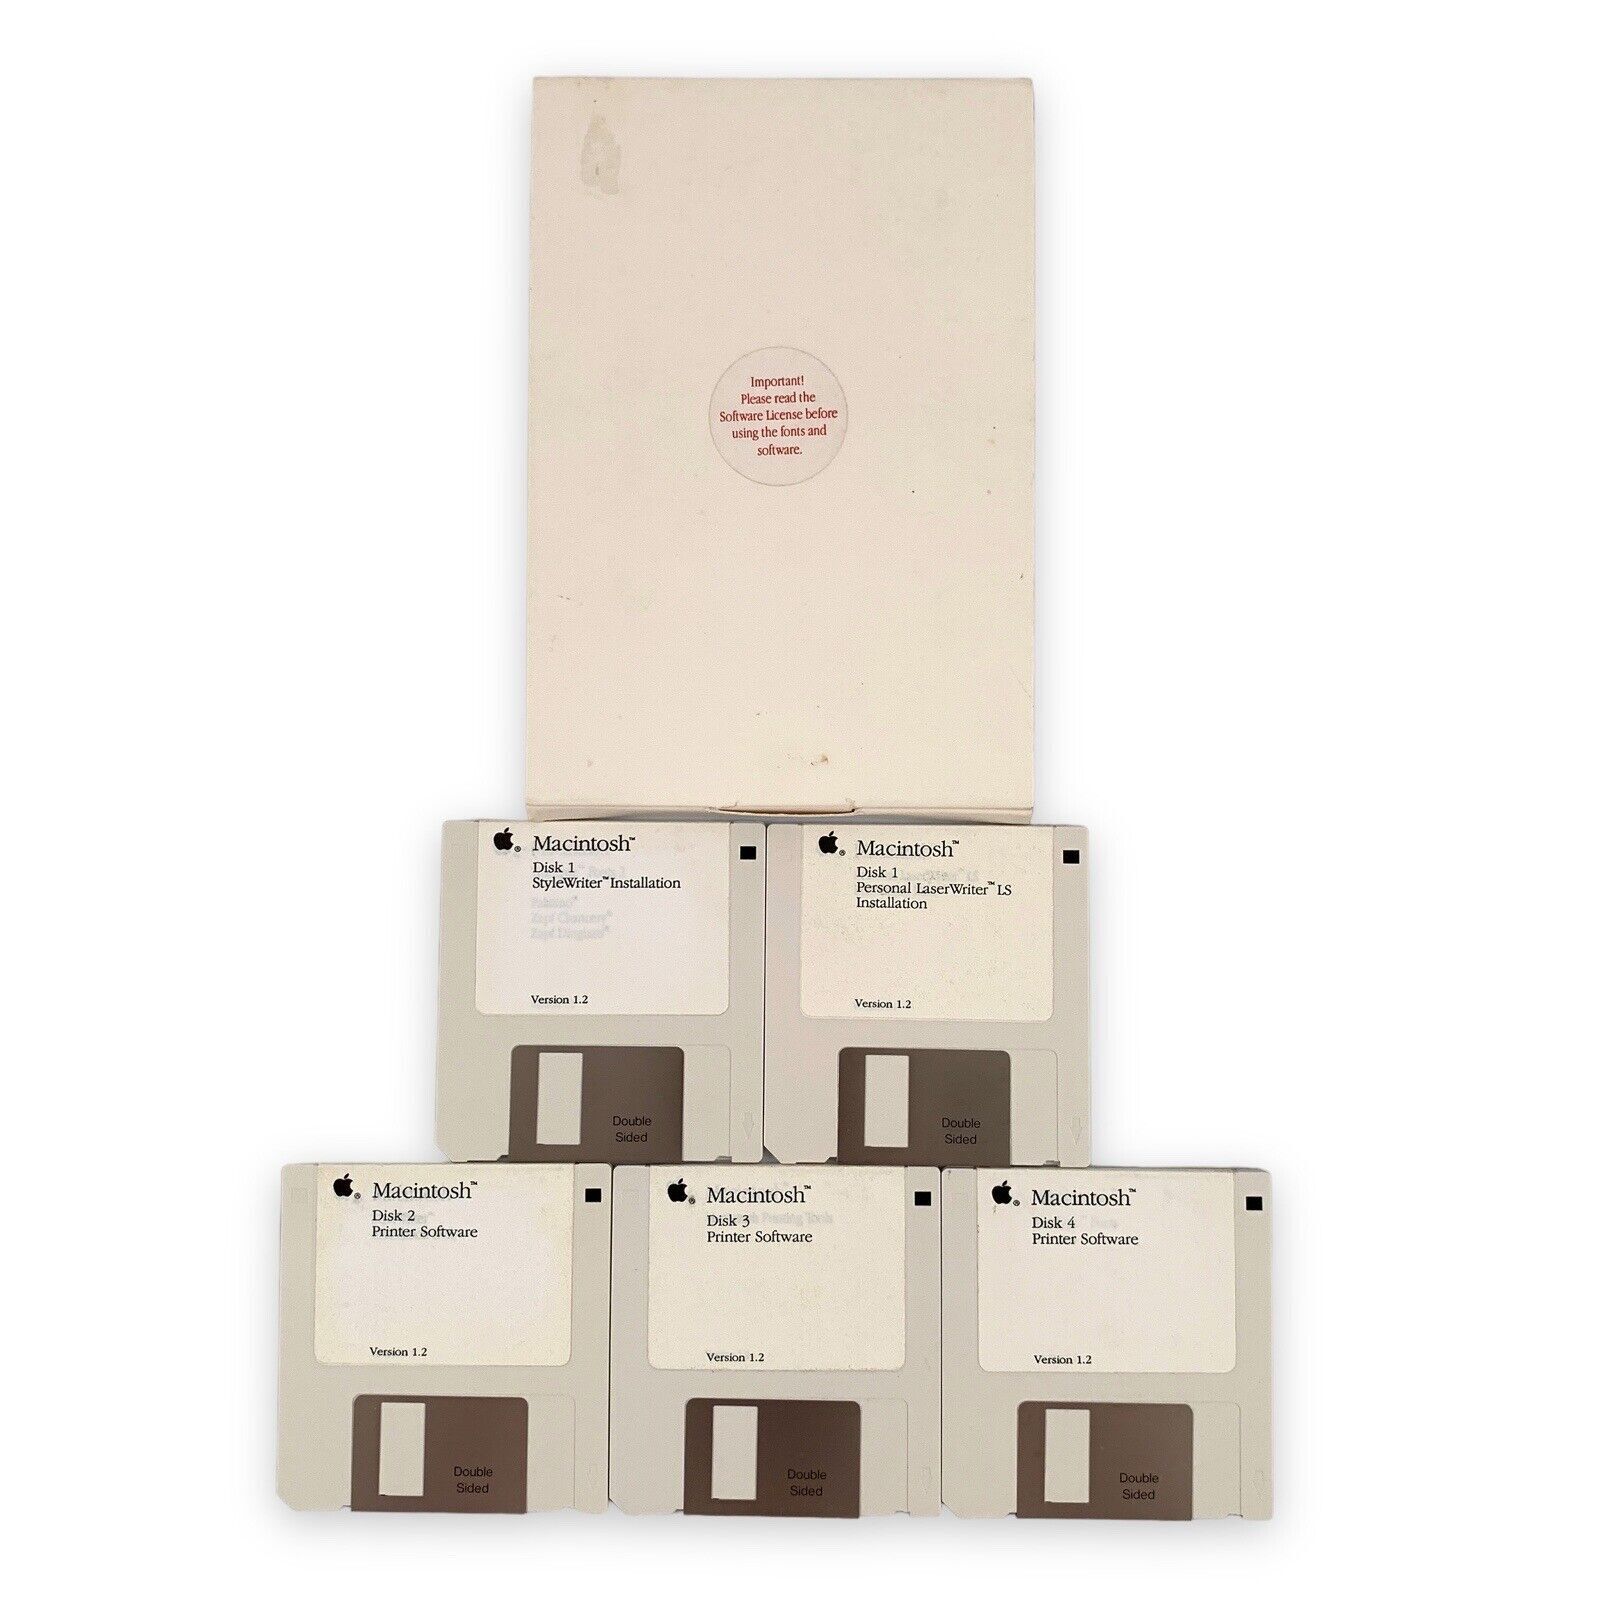 Apple Macintosh 5 Disk Printer Software Set VTG 1991 StyleWriter LaserWriter